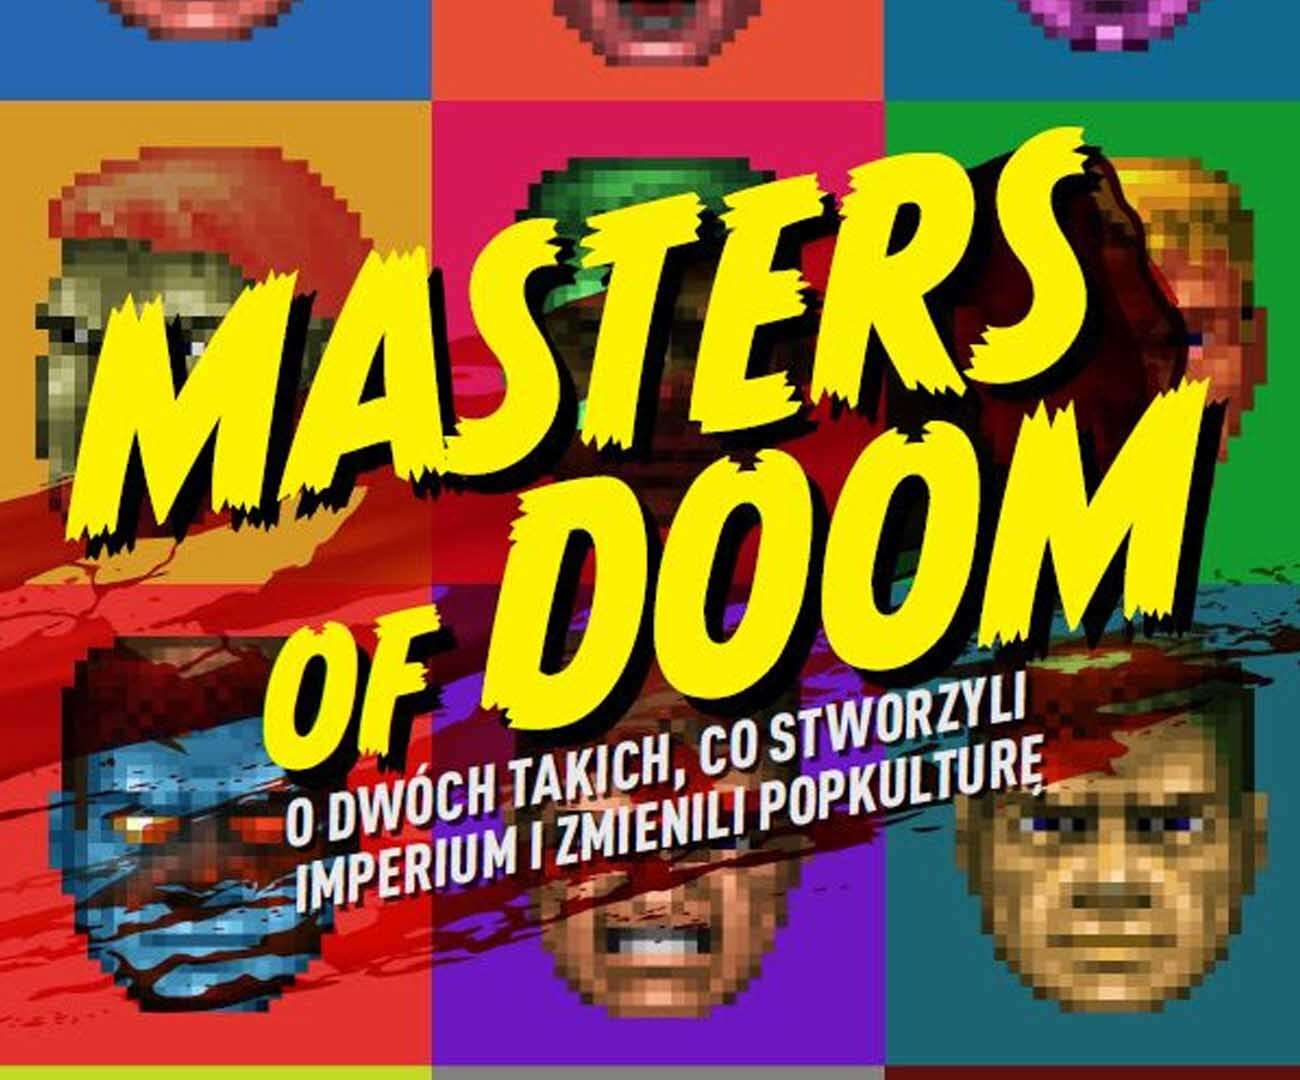 masters of doom, david kushner